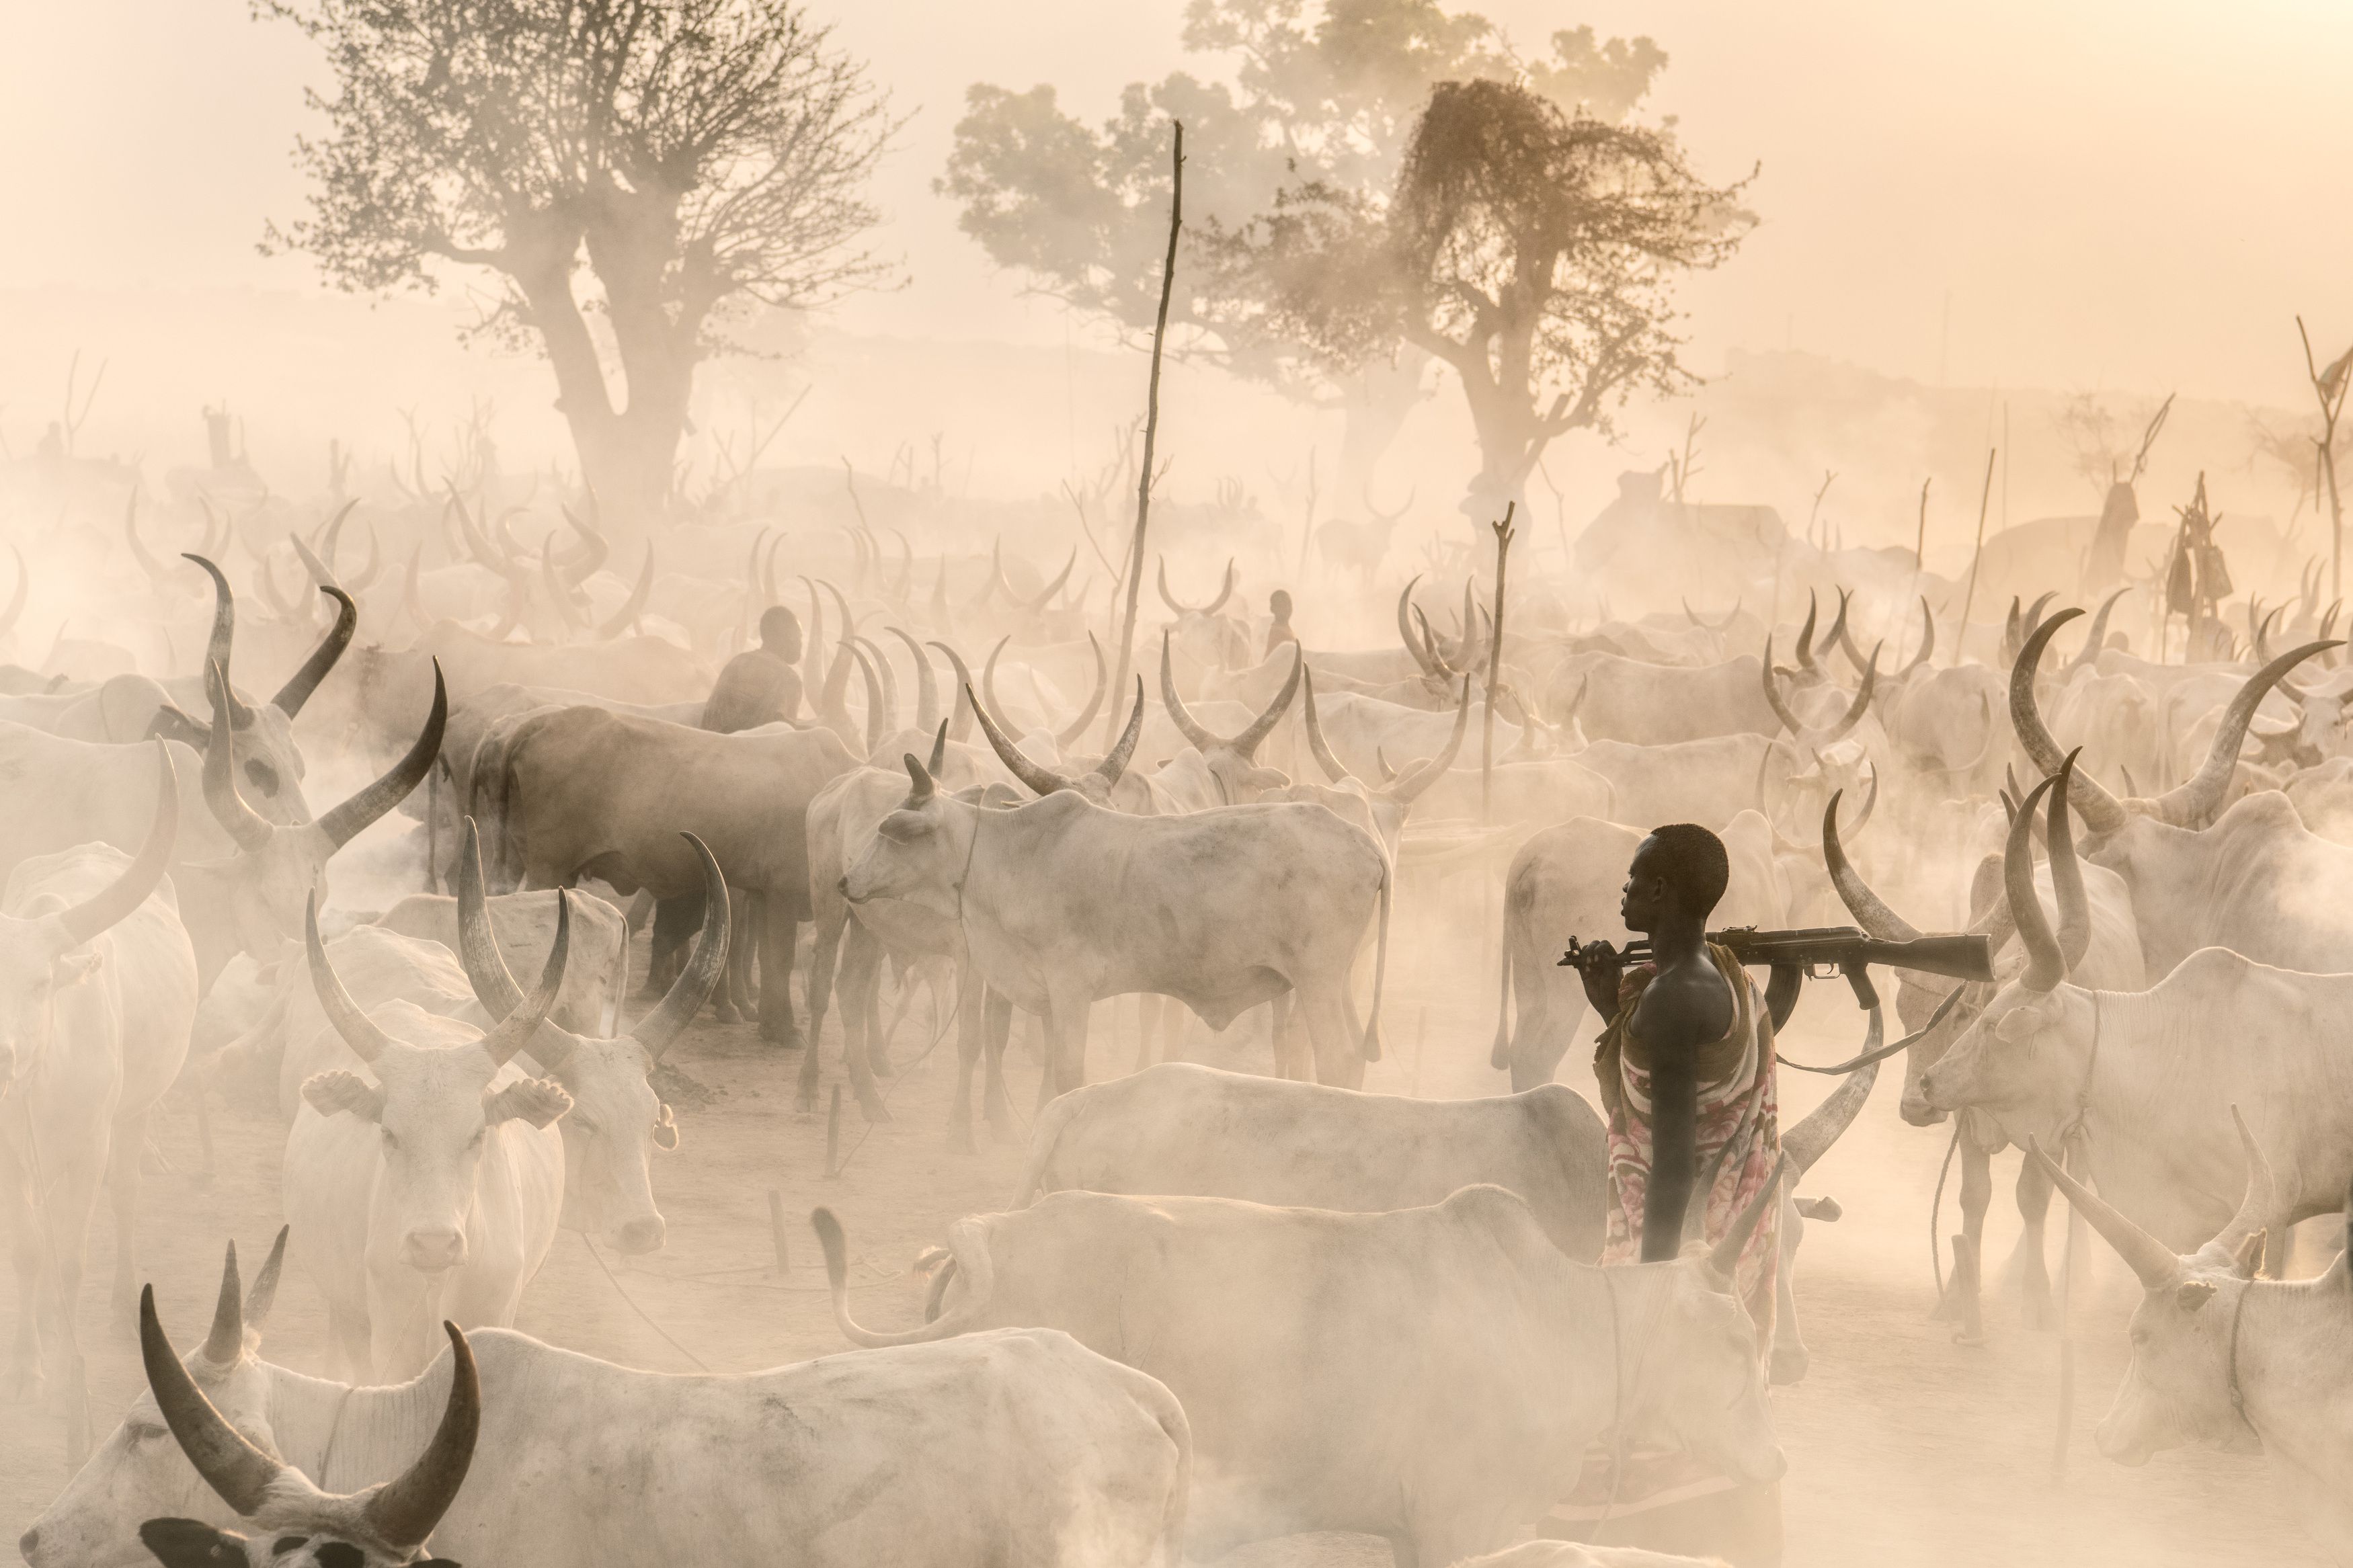 Mundari, herder, herd, cattle camp, South Sudan, Africa, , Trevor Cole